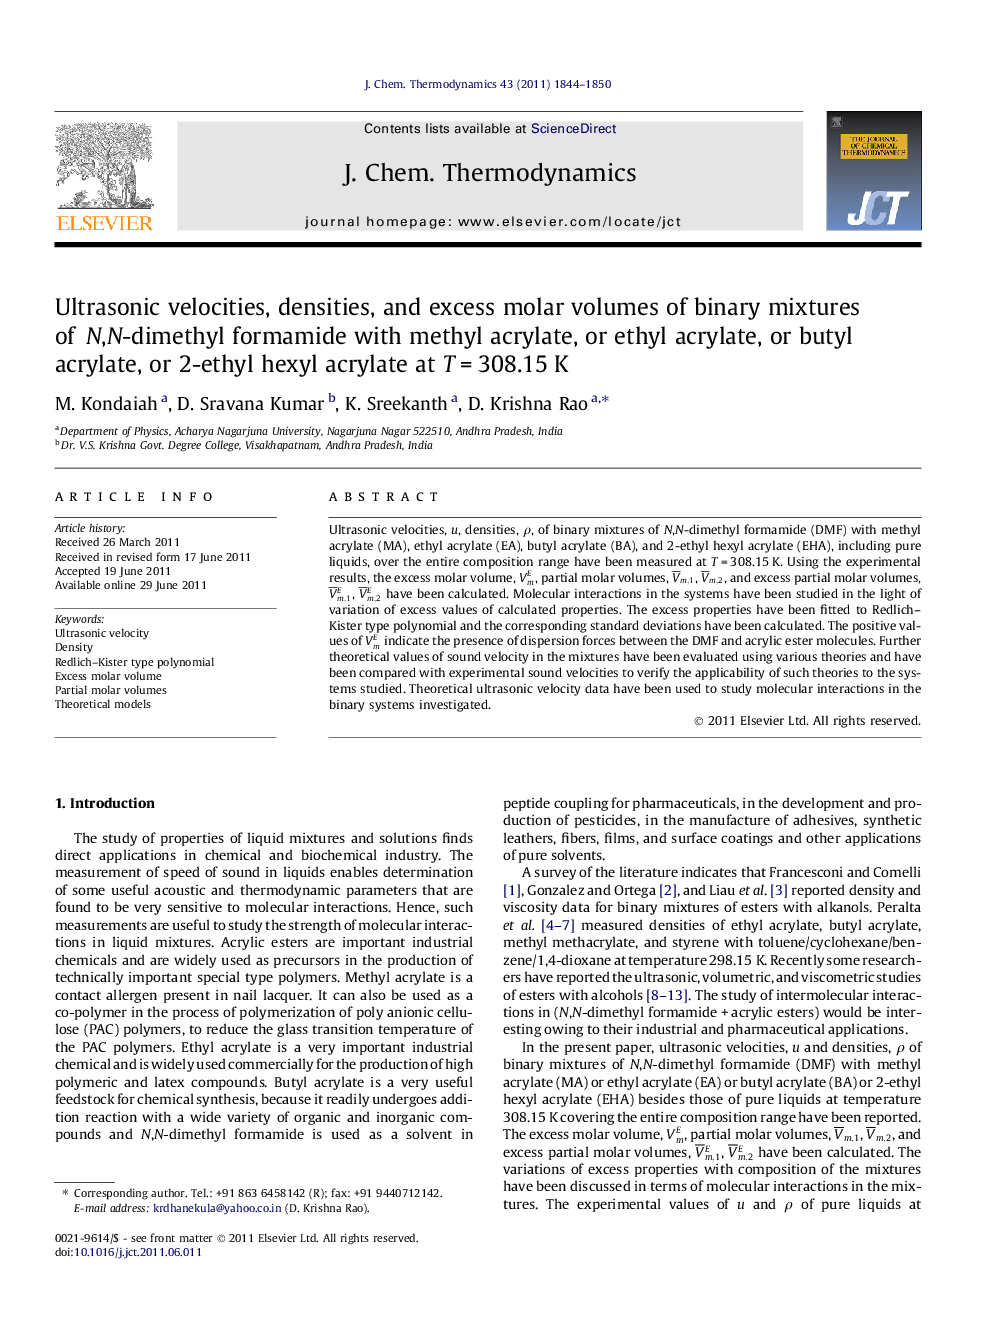 Ultrasonic velocities, densities, and excess molar volumes of binary mixtures of N,N-dimethyl formamide with methyl acrylate, or ethyl acrylate, or butyl acrylate, or 2-ethyl hexyl acrylate at T = 308.15 K